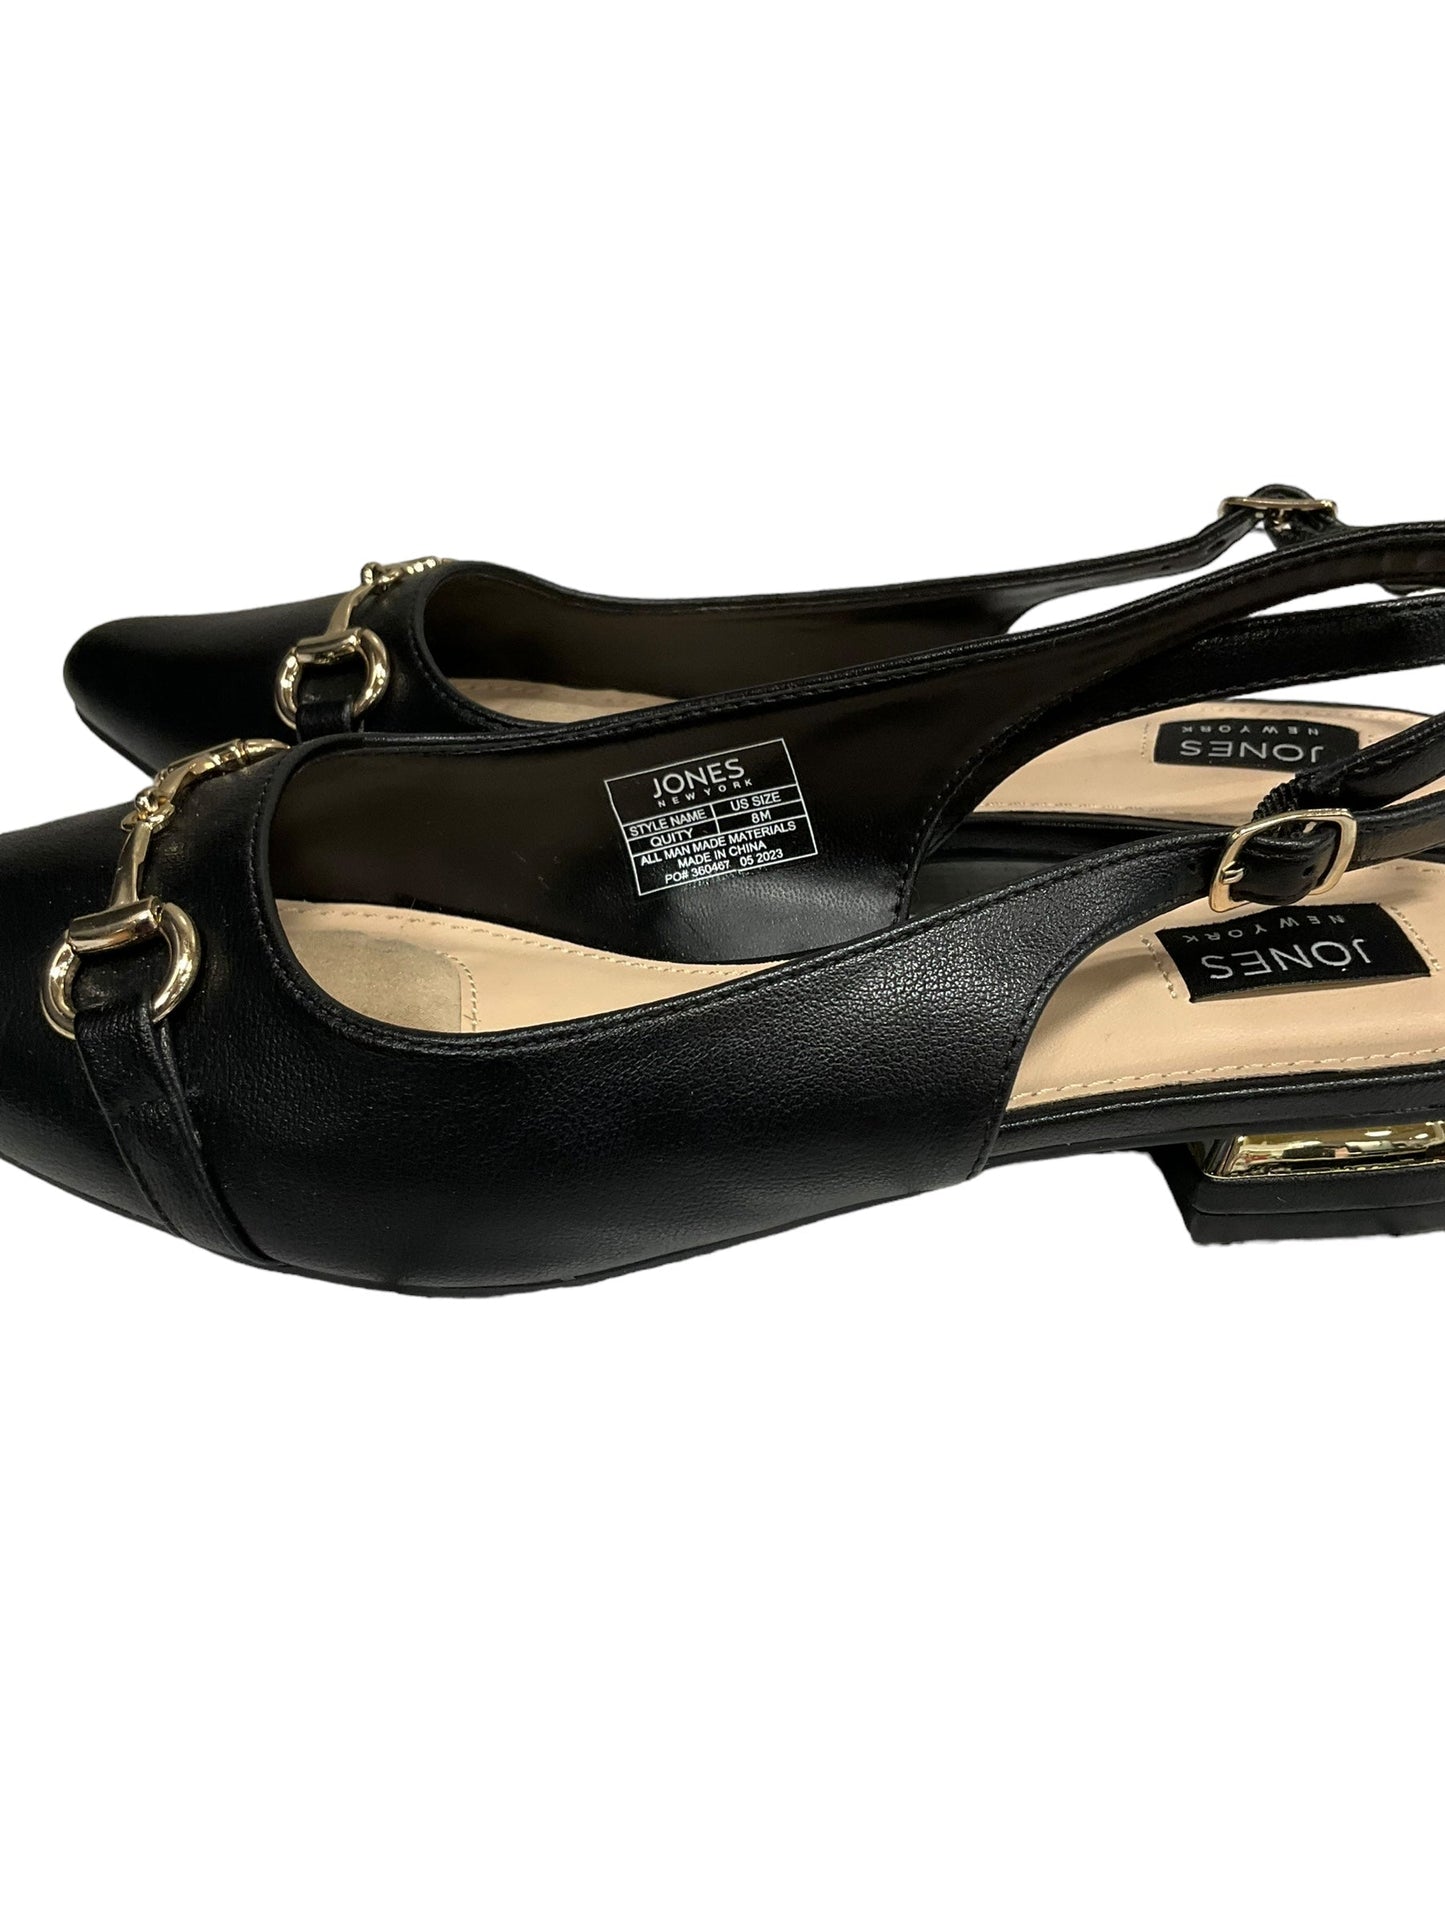 Black Shoes Flats Jones New York, Size 8